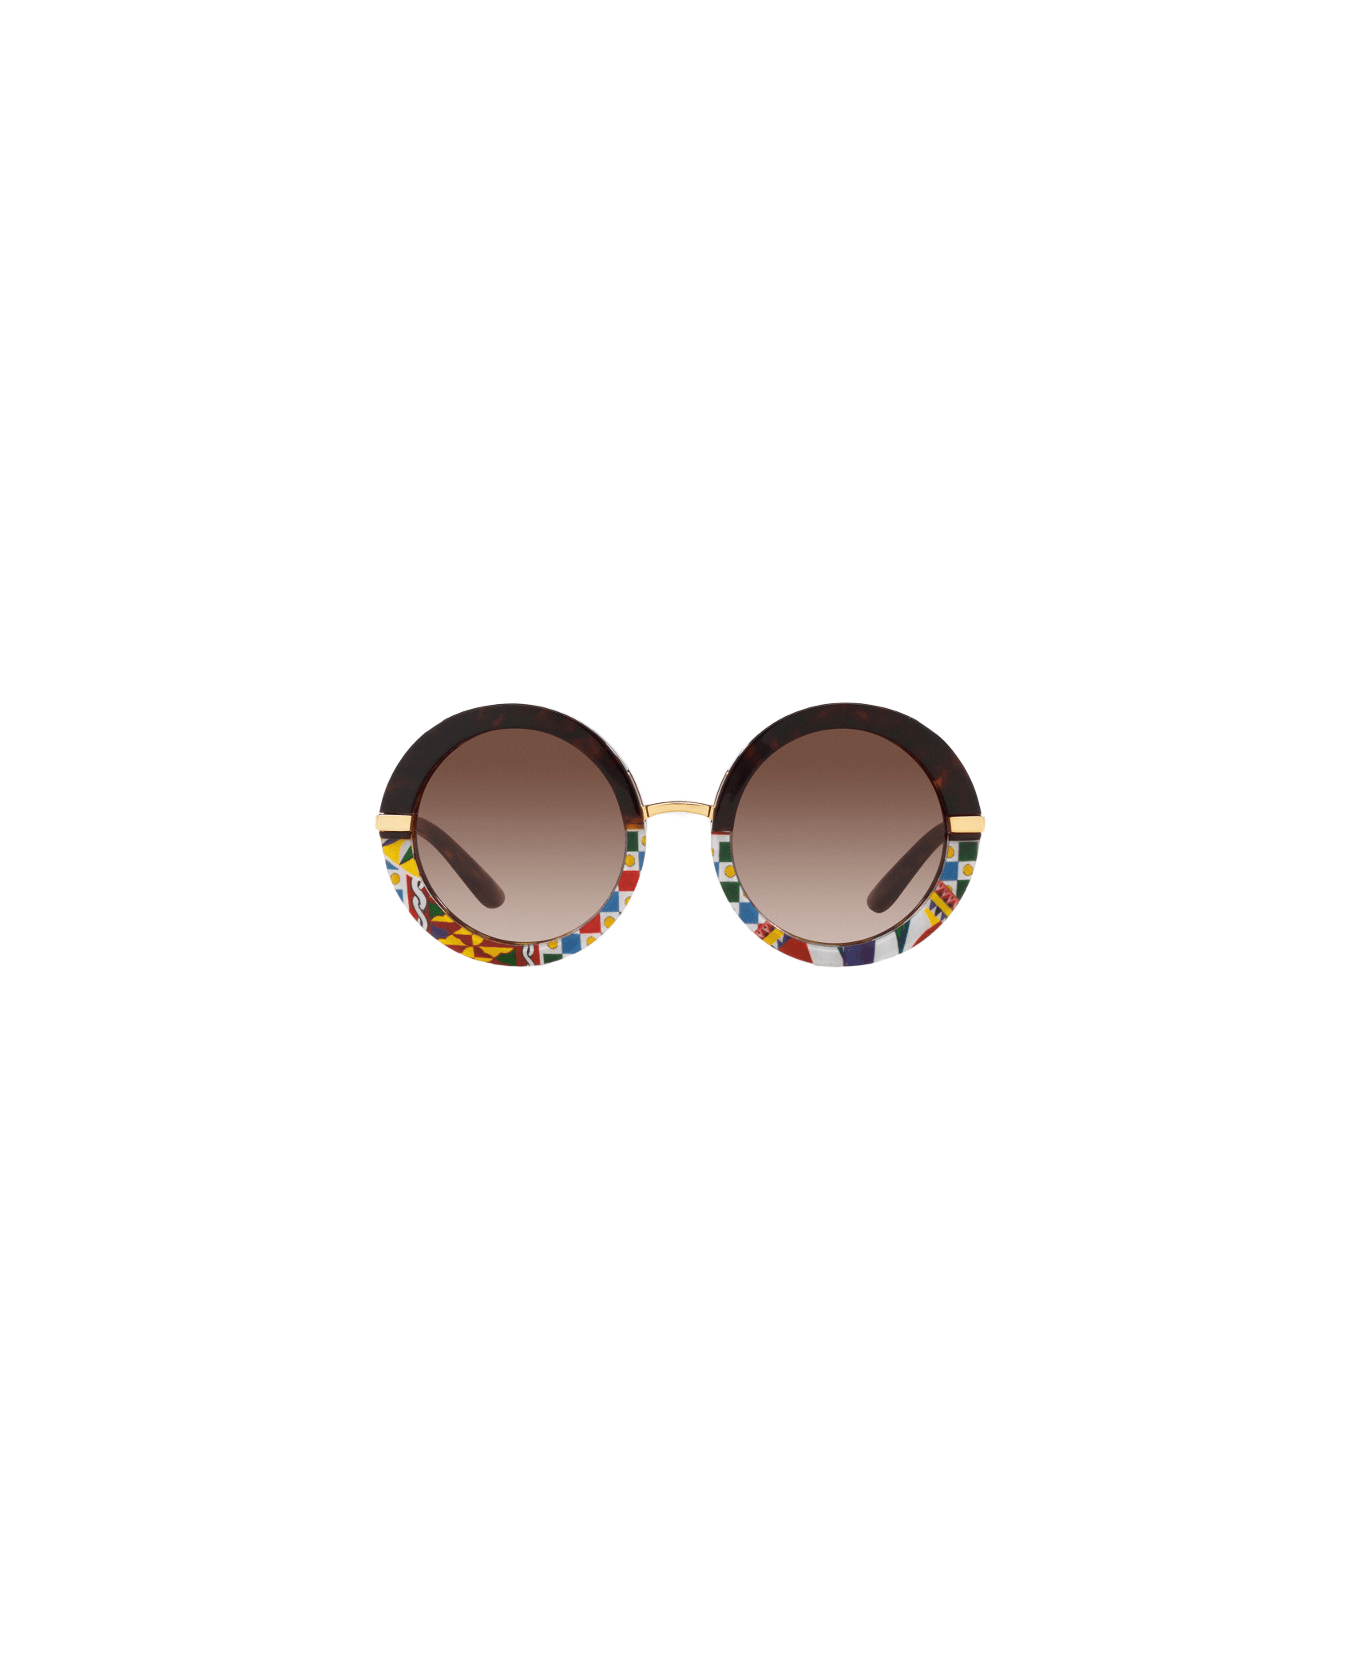 Dolce & Gabbana Eyewear DG4393s 3278/13 Sunglasses サングラス